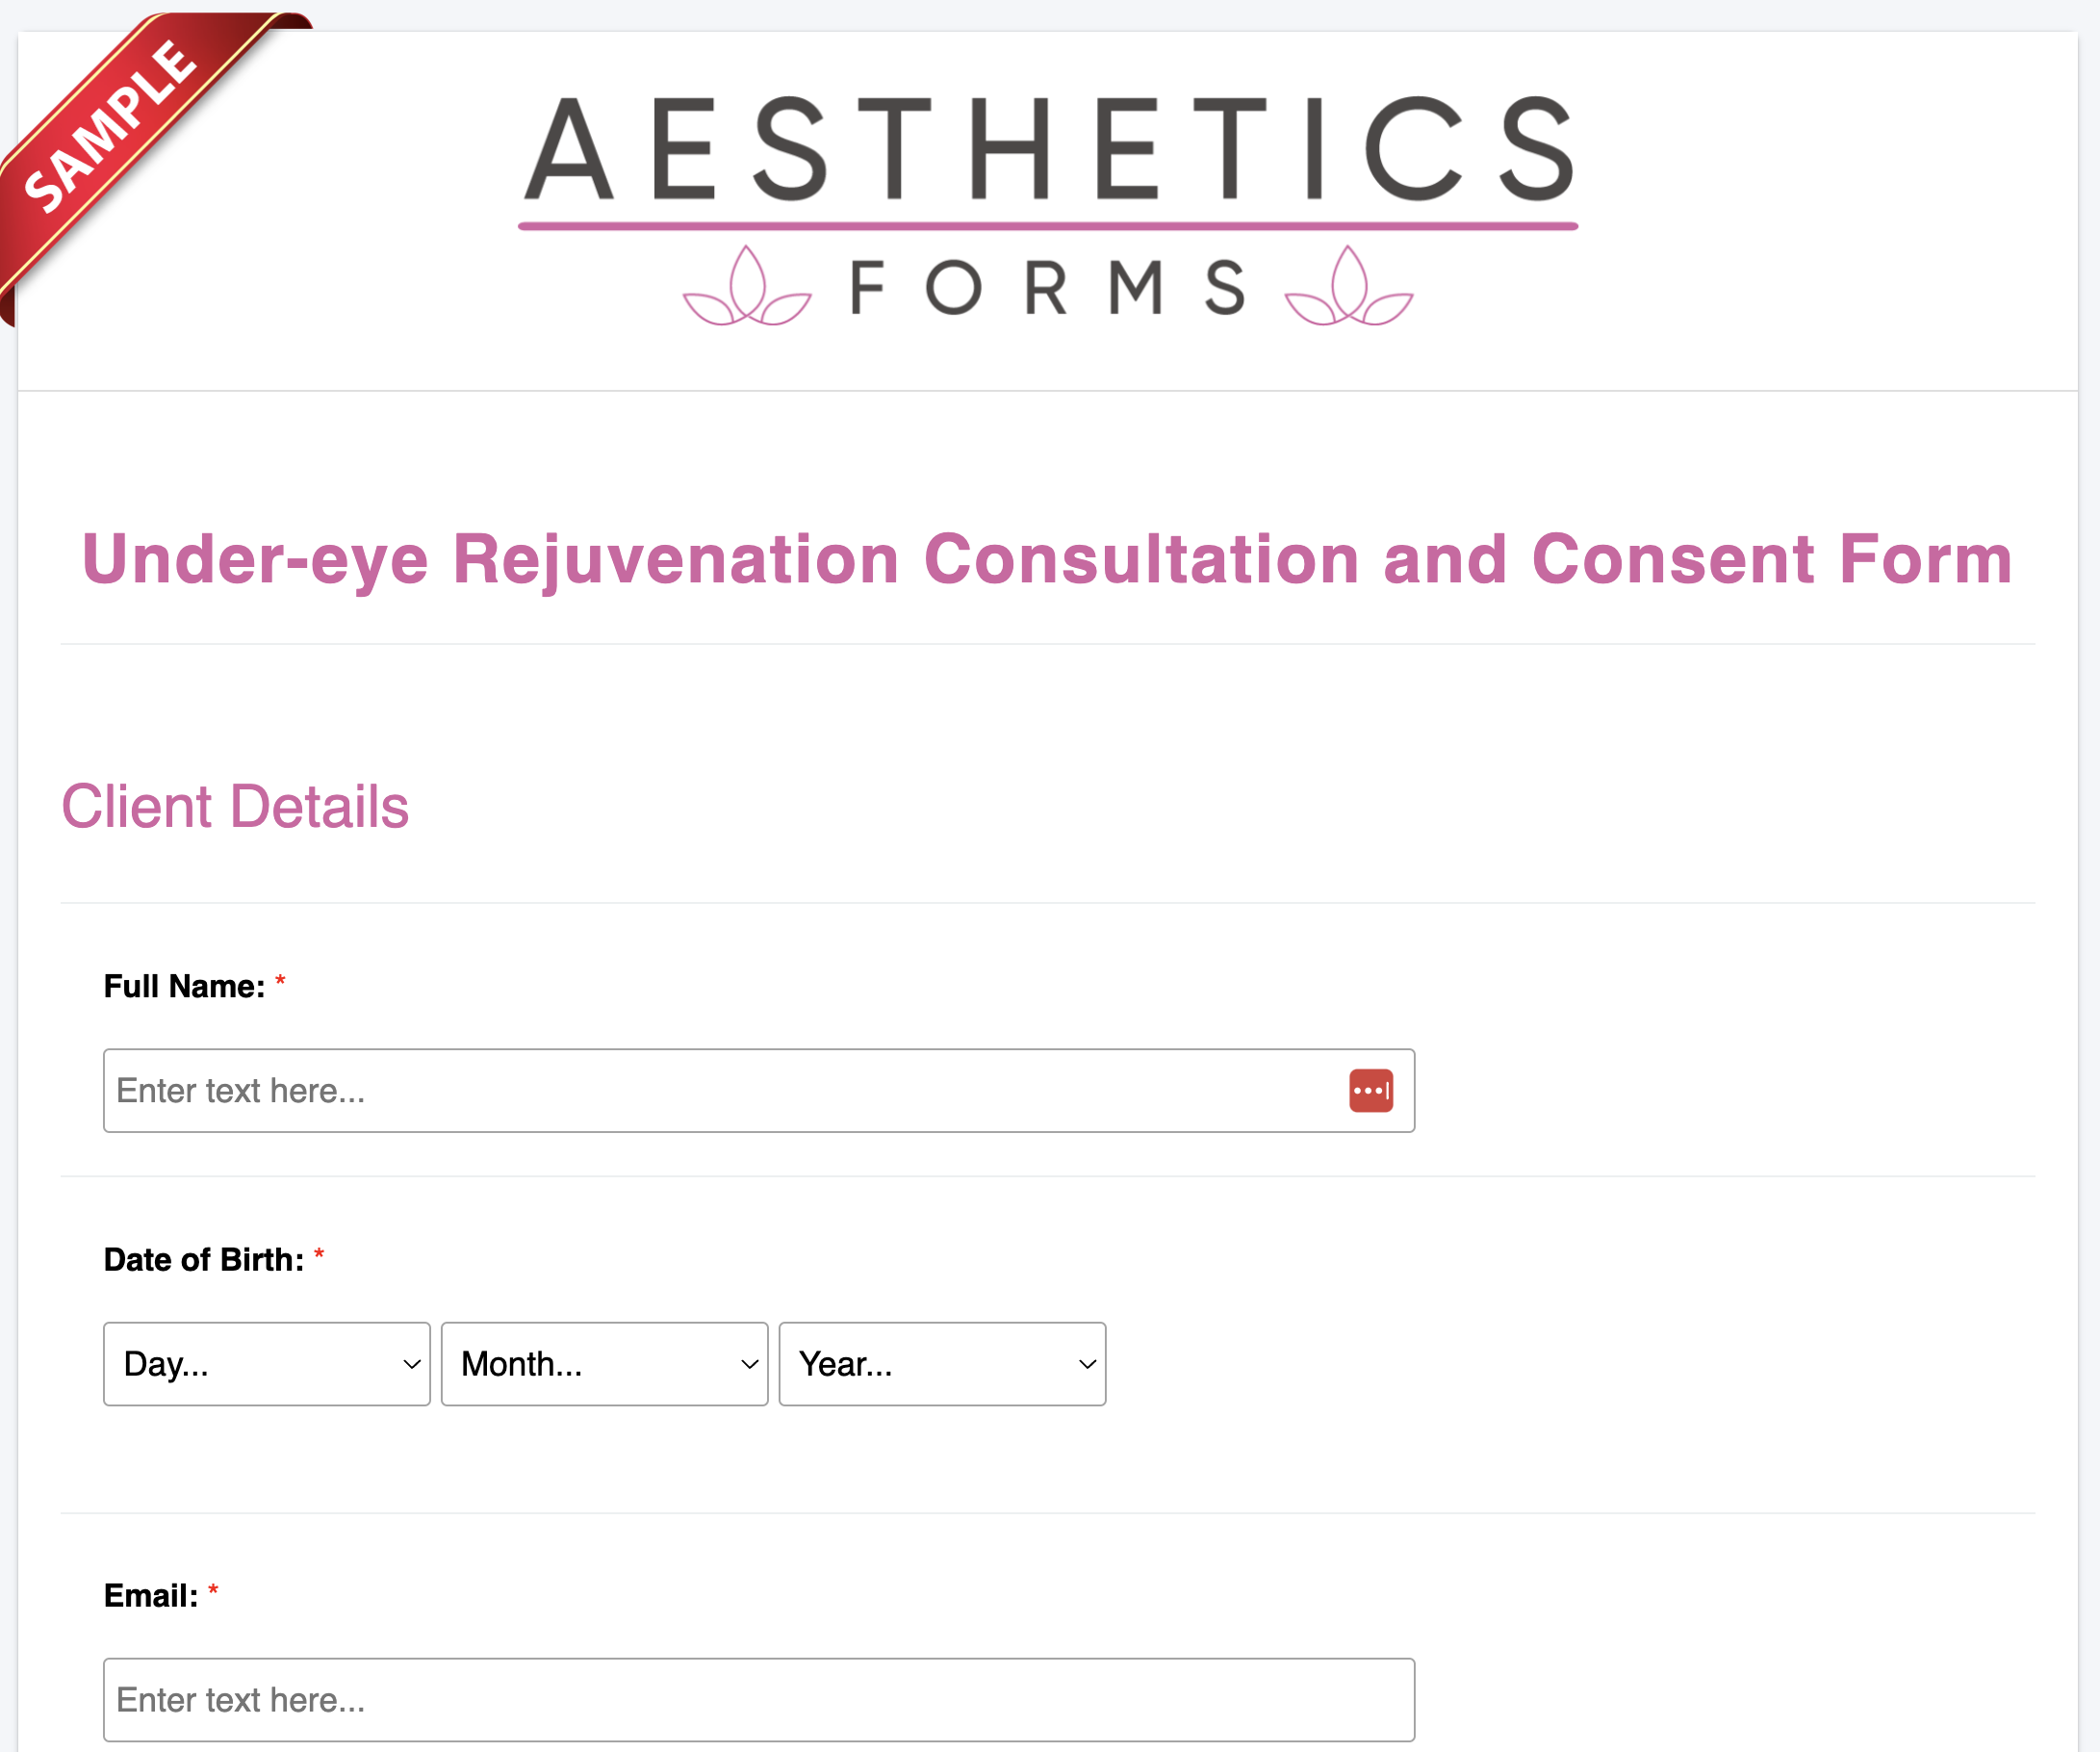 Under-eye Rejuvenation Consultation and Consent Form